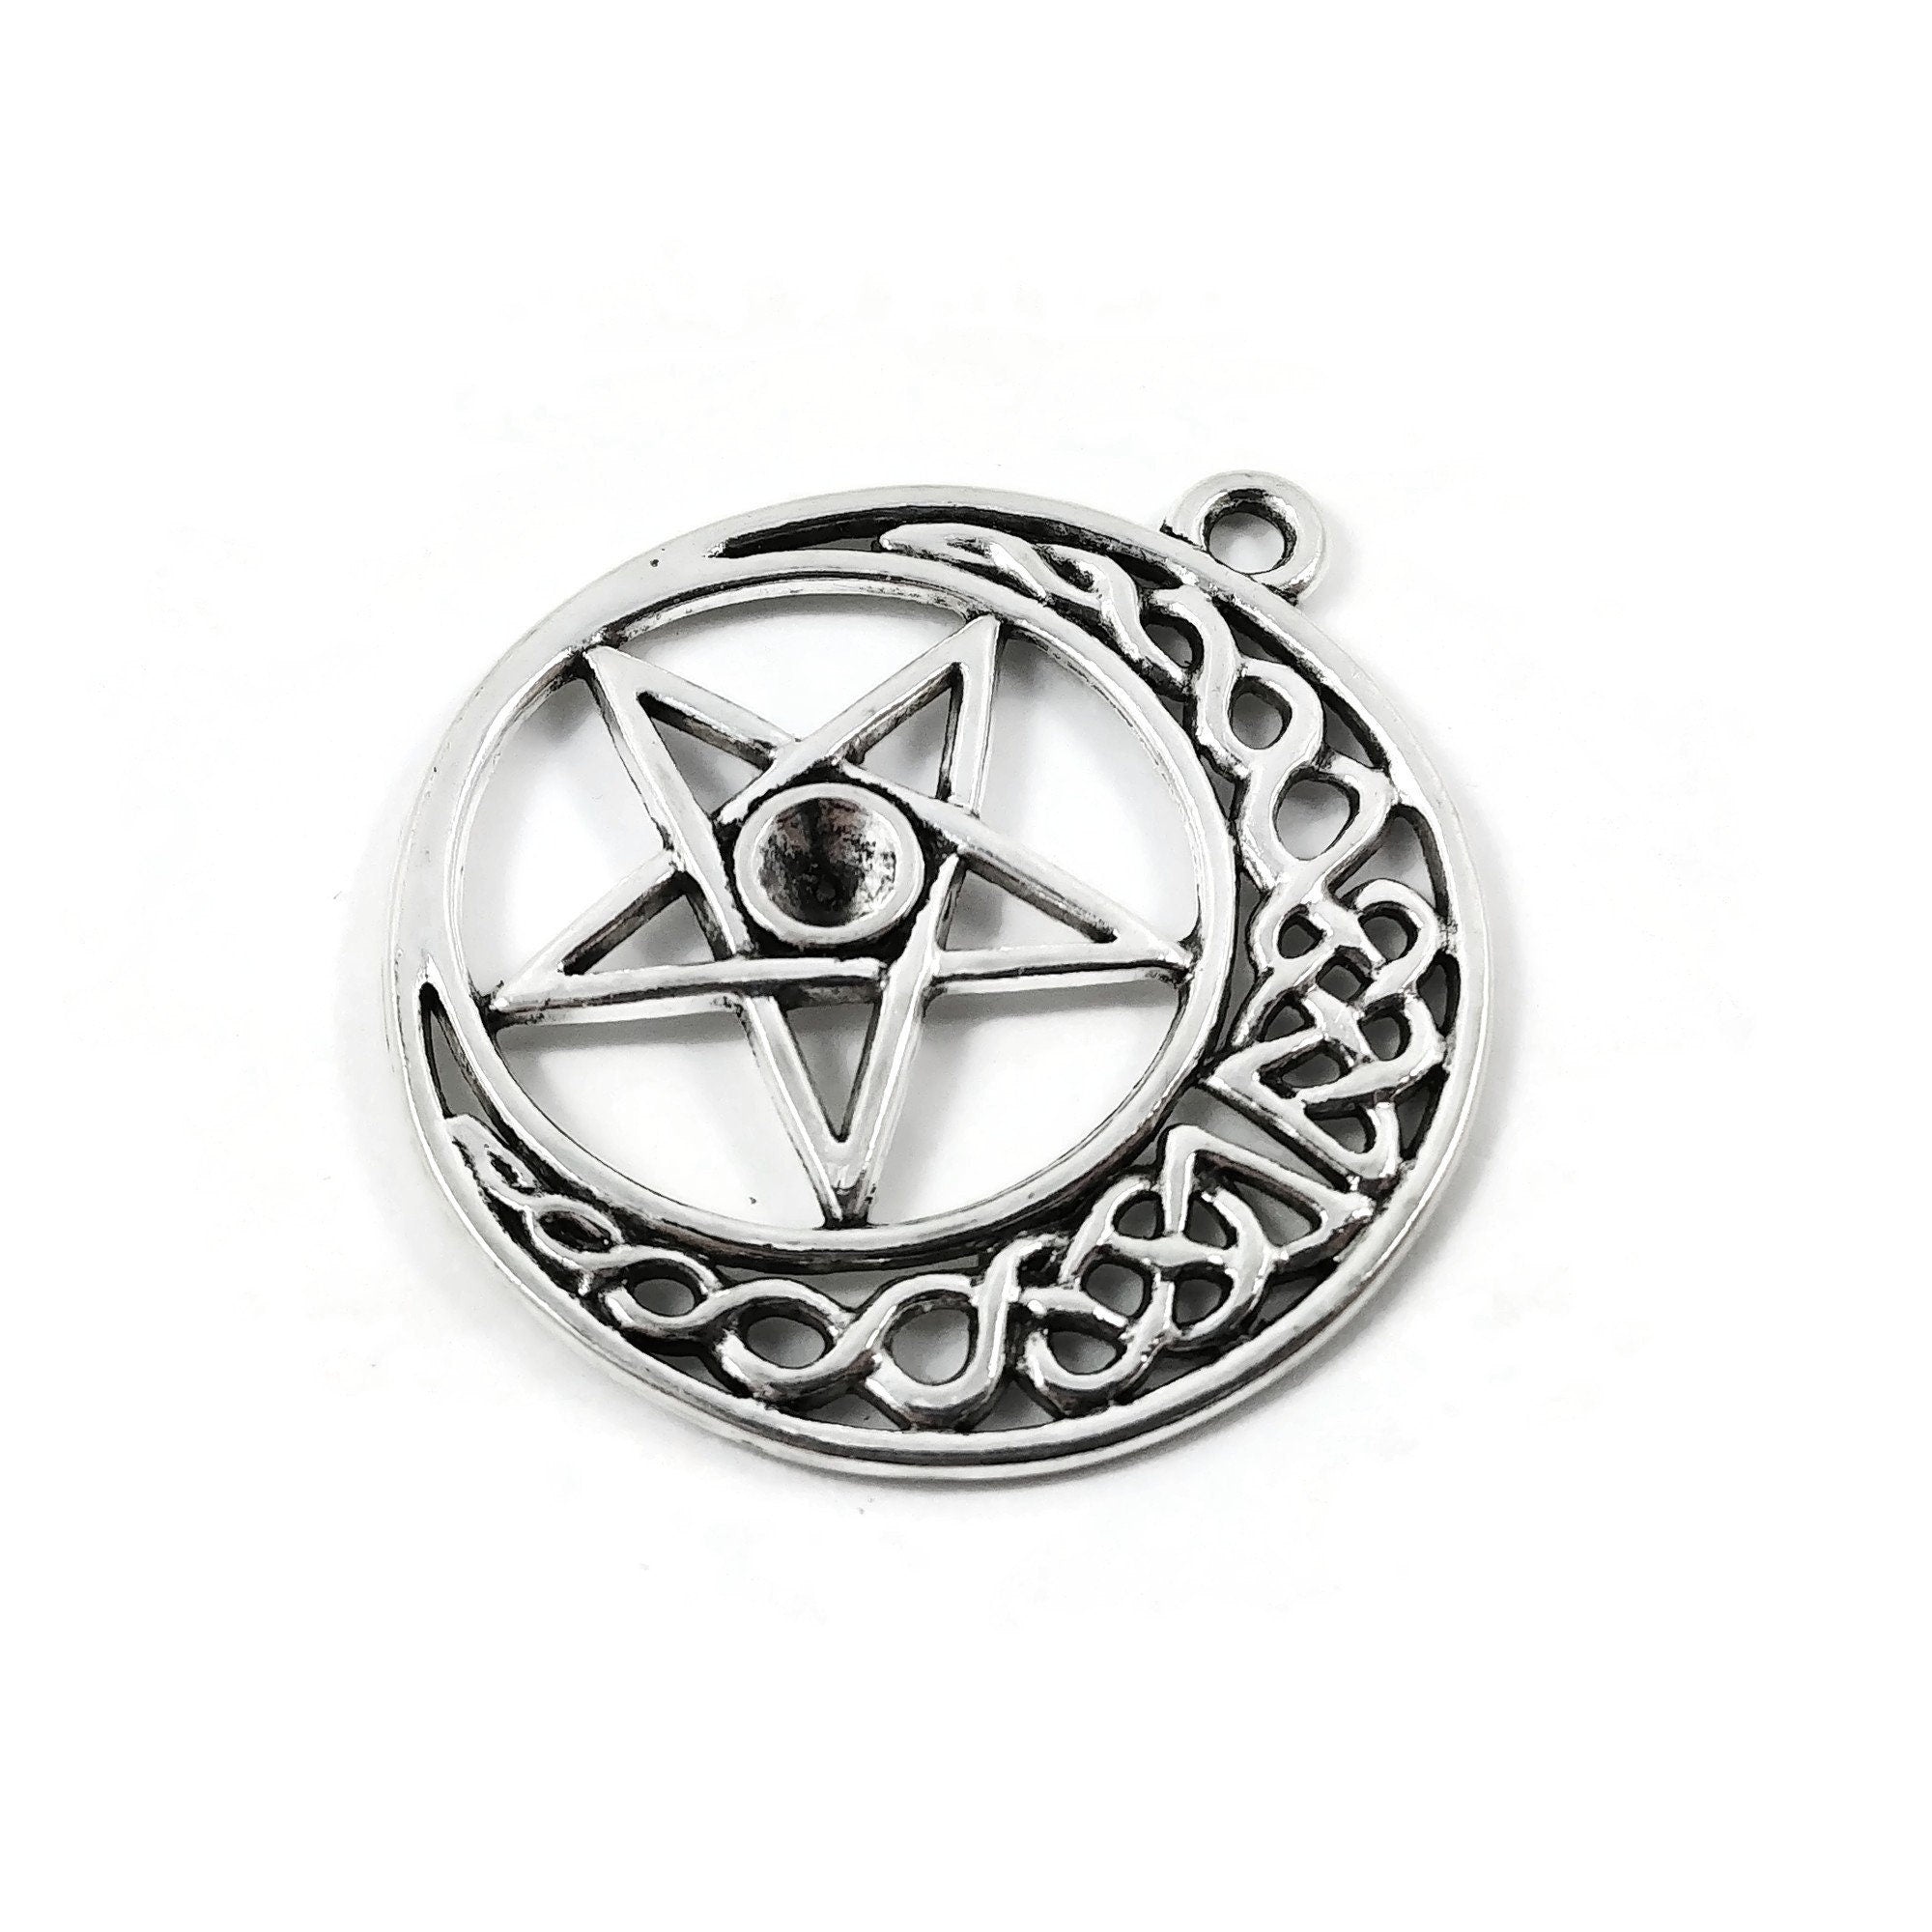 5 Celtic knot pentagram charms, Rhinestone setting, Antique silver metal pendants, Jewelry making supplies